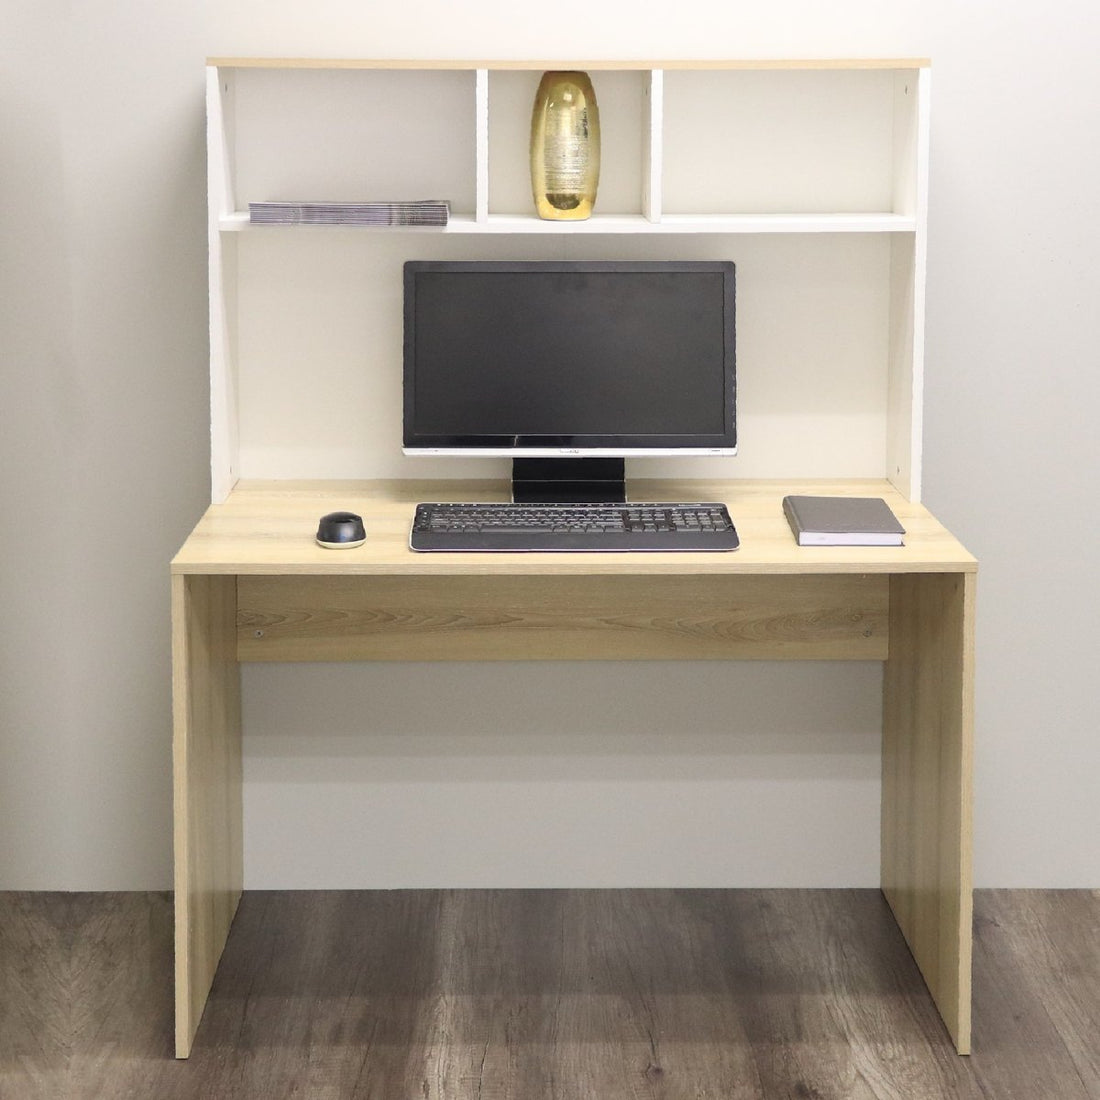 Cheap Student and Computer Desks | From Denver Furniture - BuildSaver